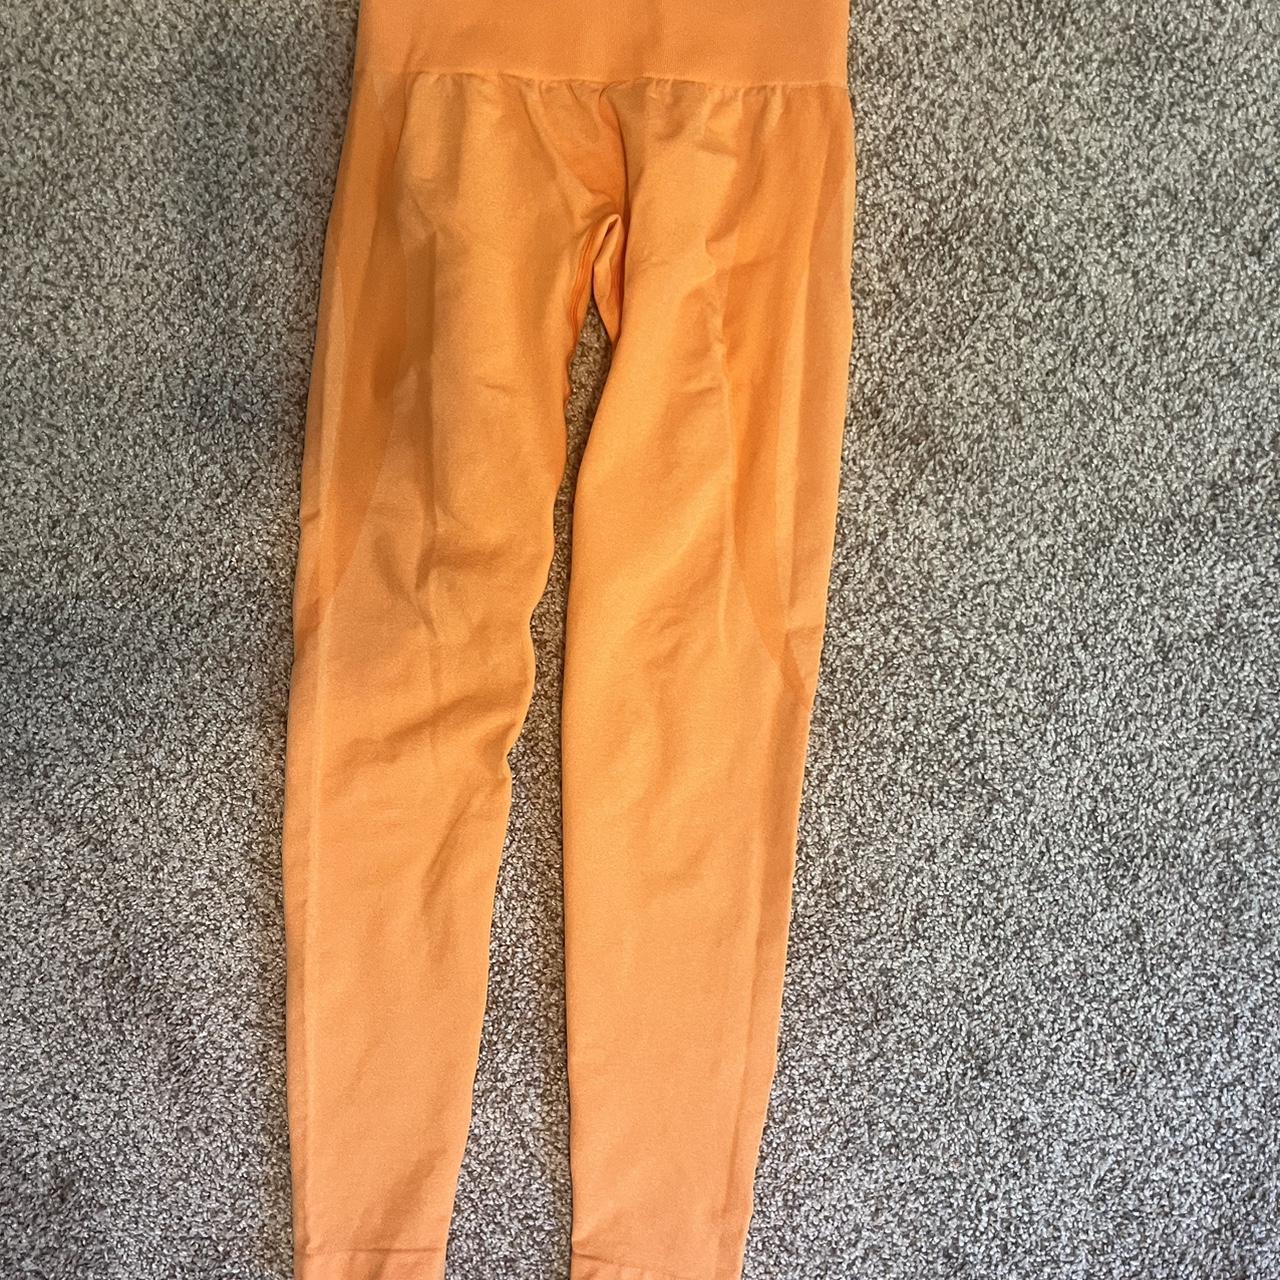 NVGTN orange contour seamless leggings -never - Depop